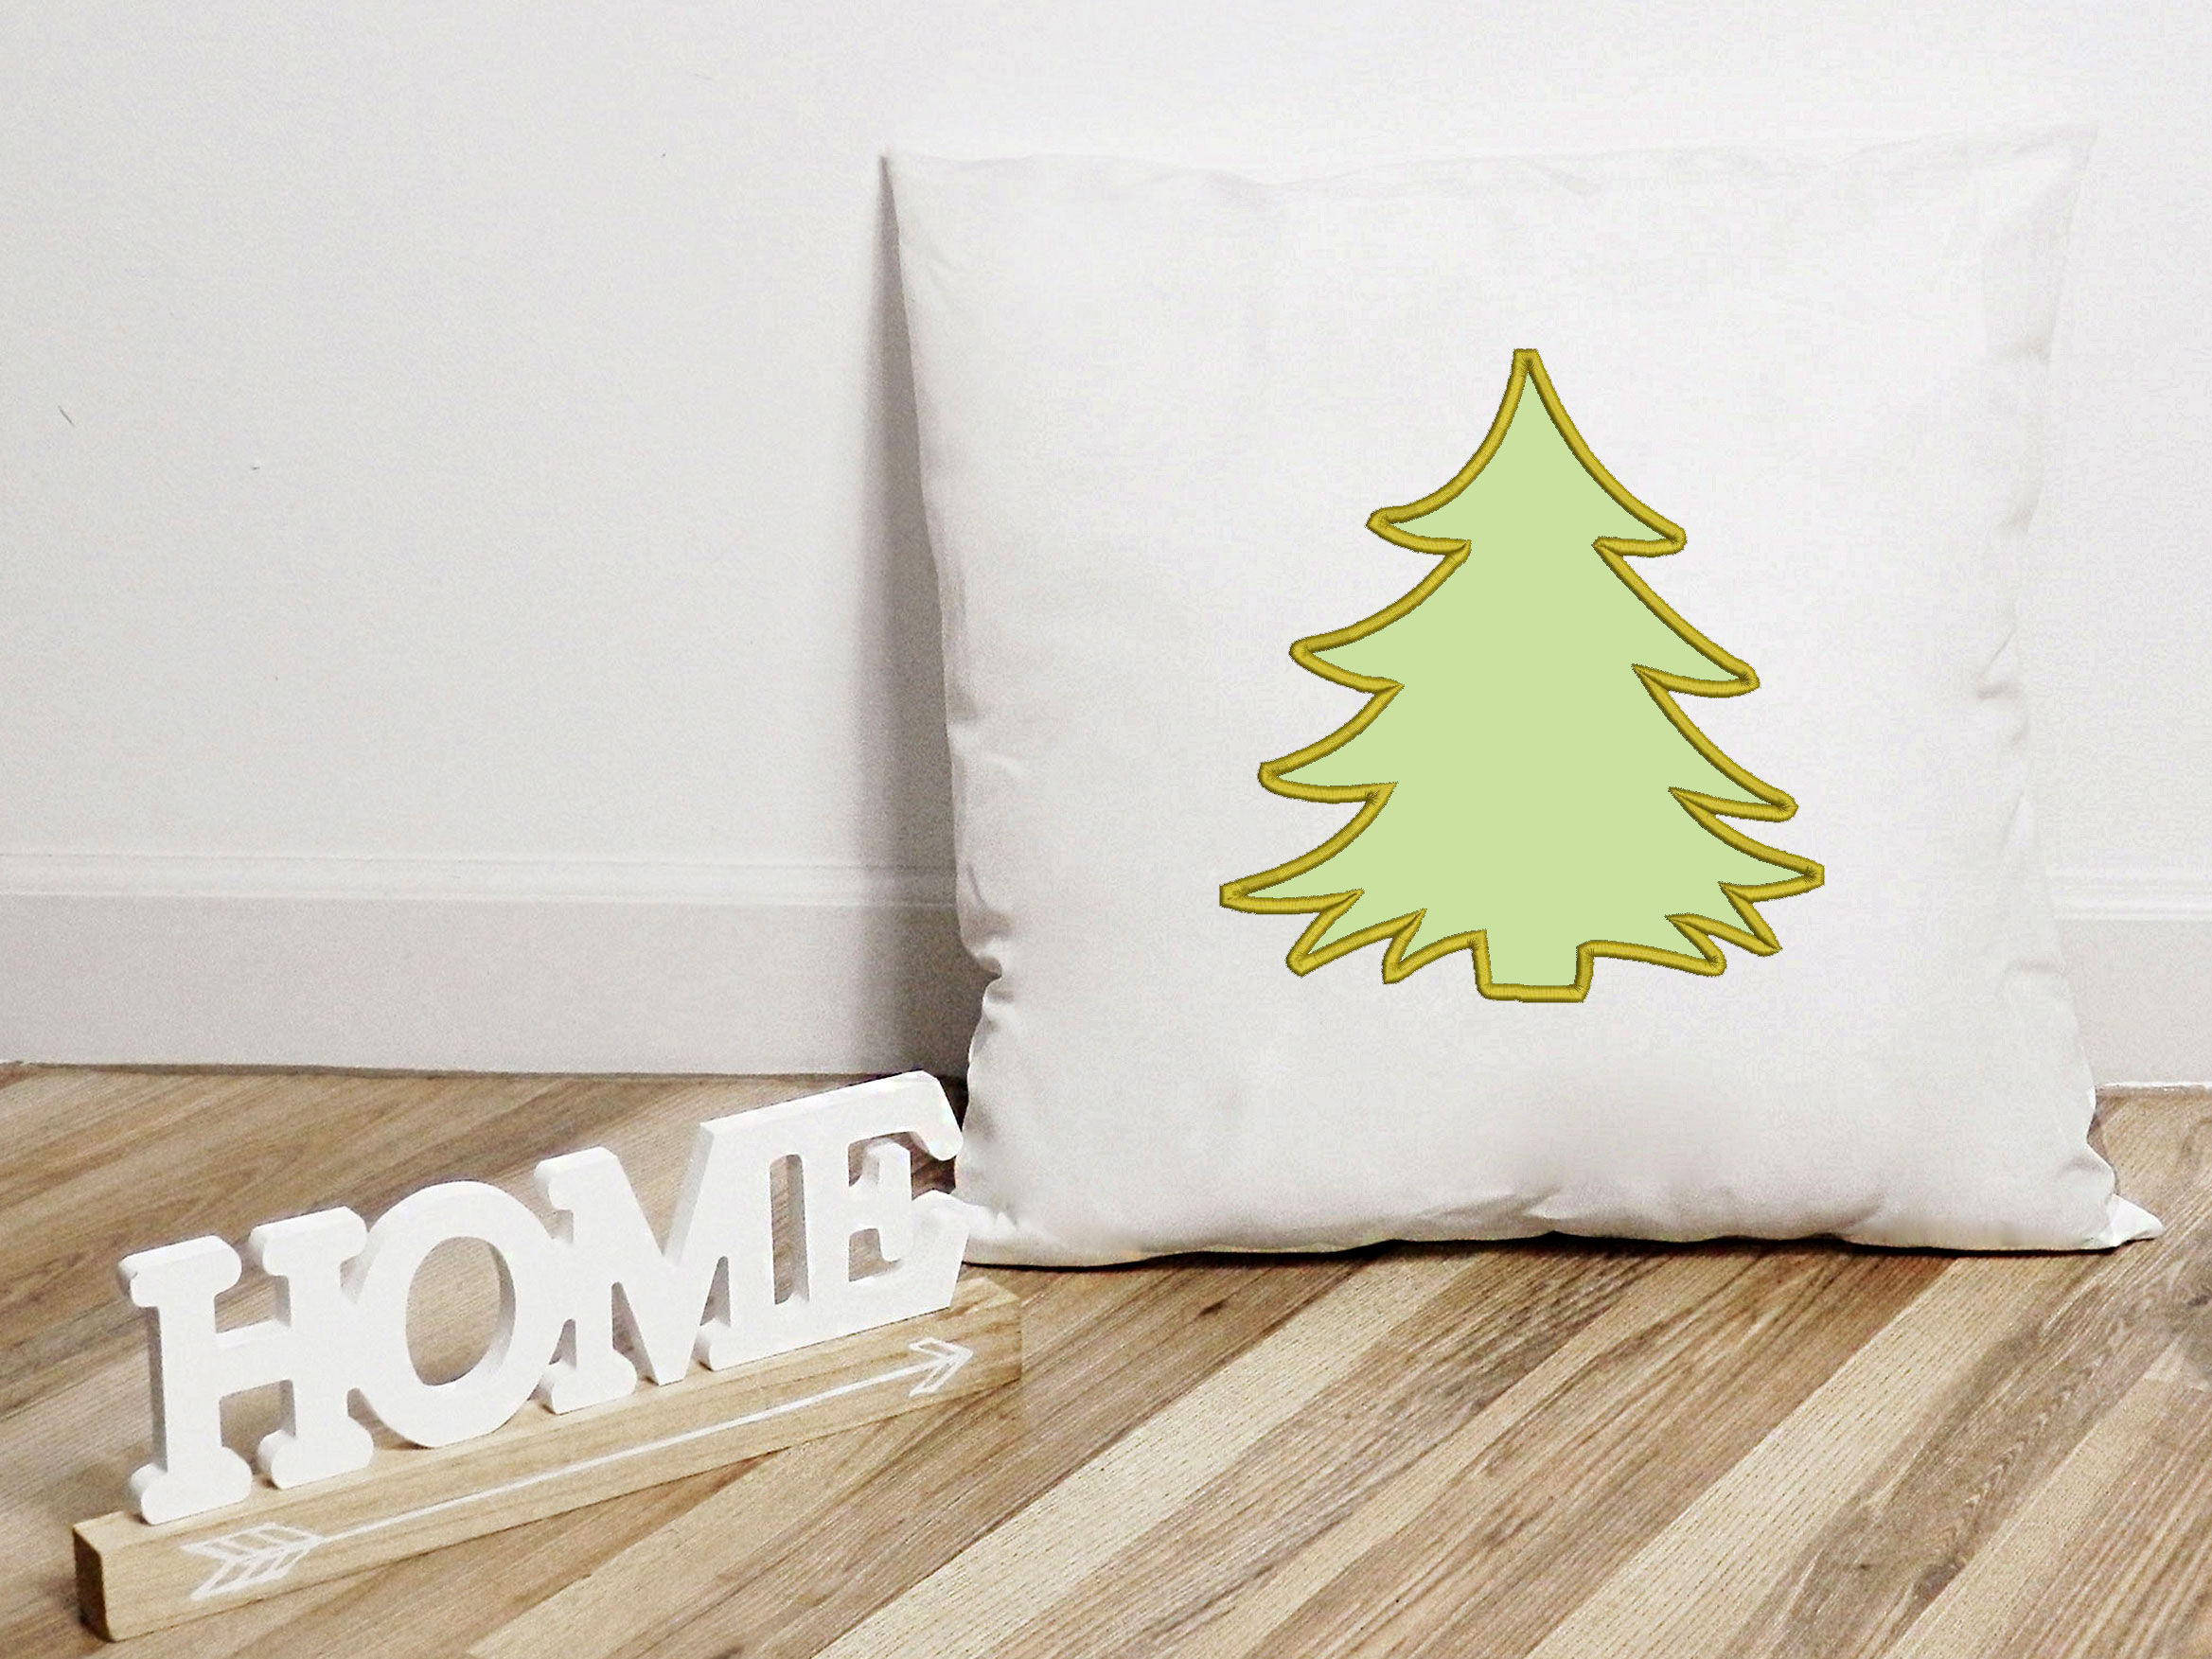 Christmas Tree Applique Design Christmas Embroidery Design Holiday By Digital Sketches Thehungryjpeg Com